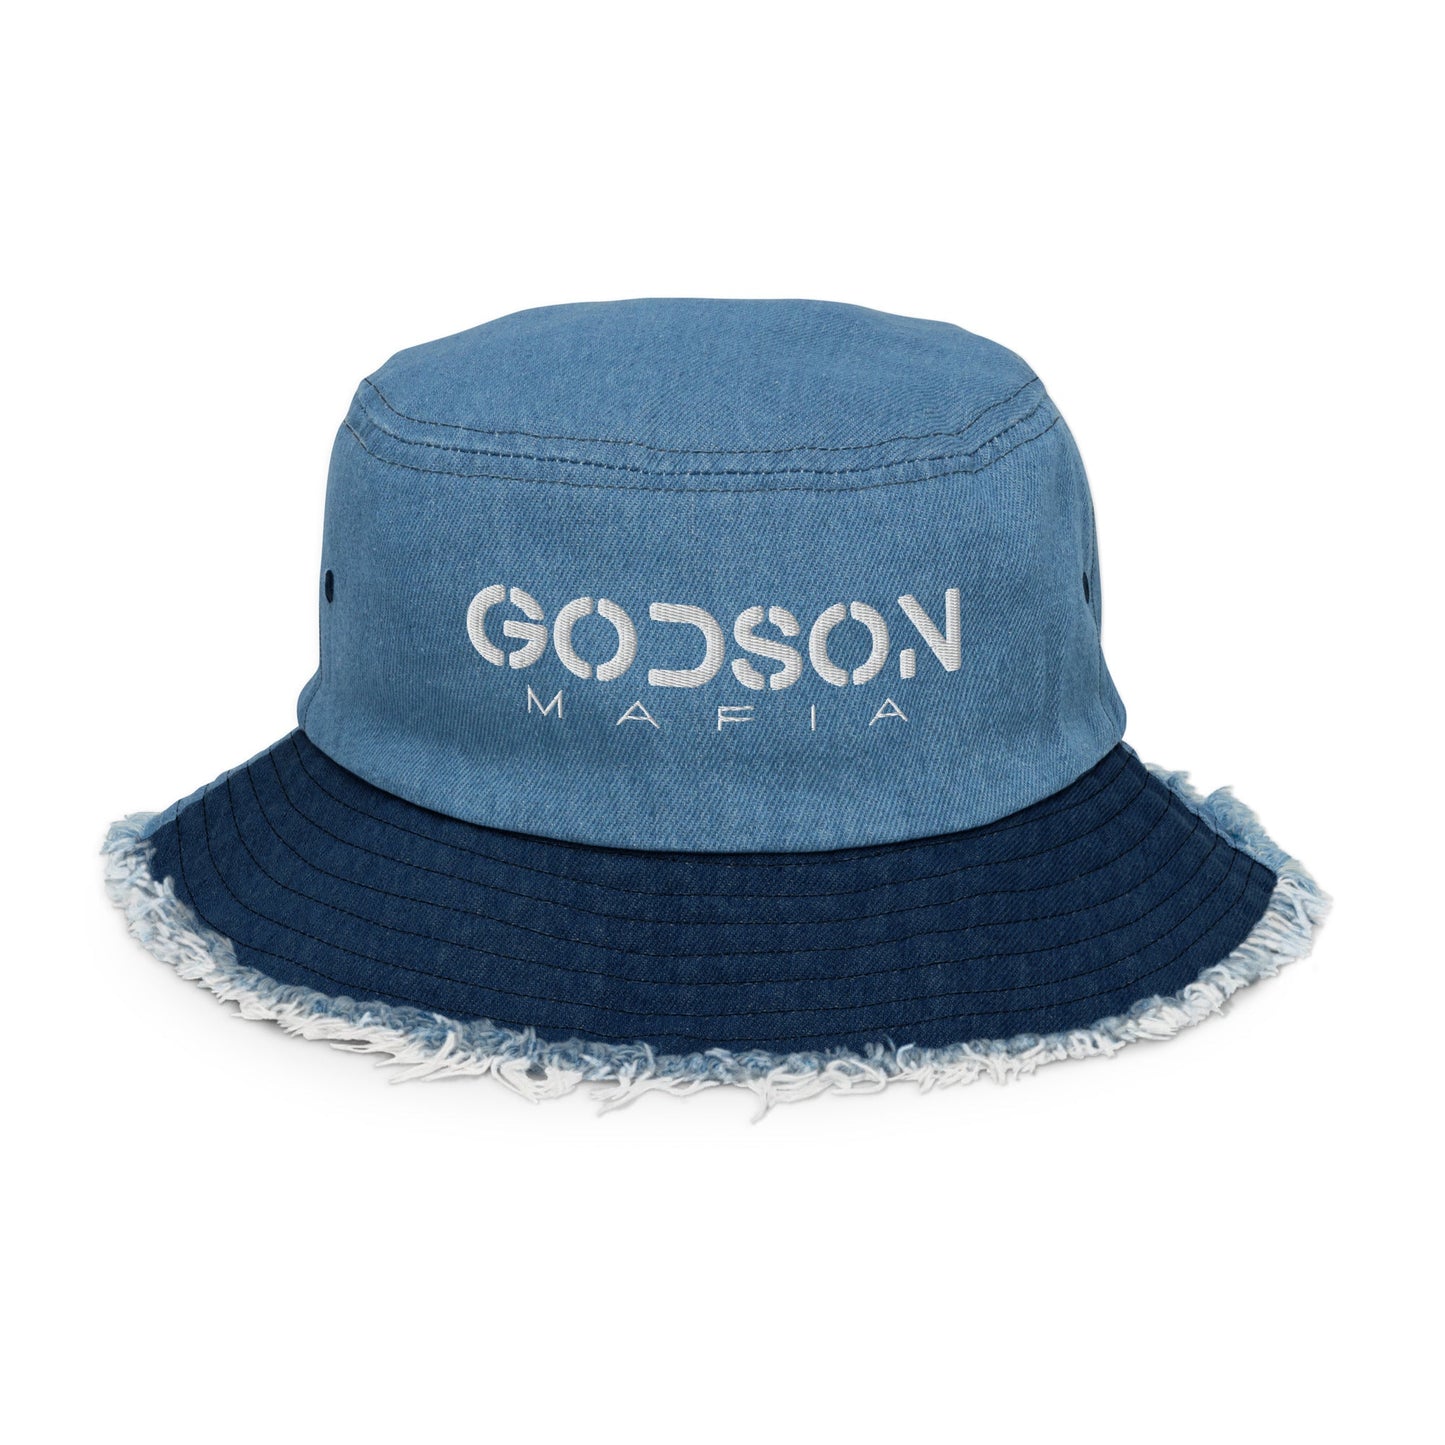 GODSON MAFIA BUCKET HAT